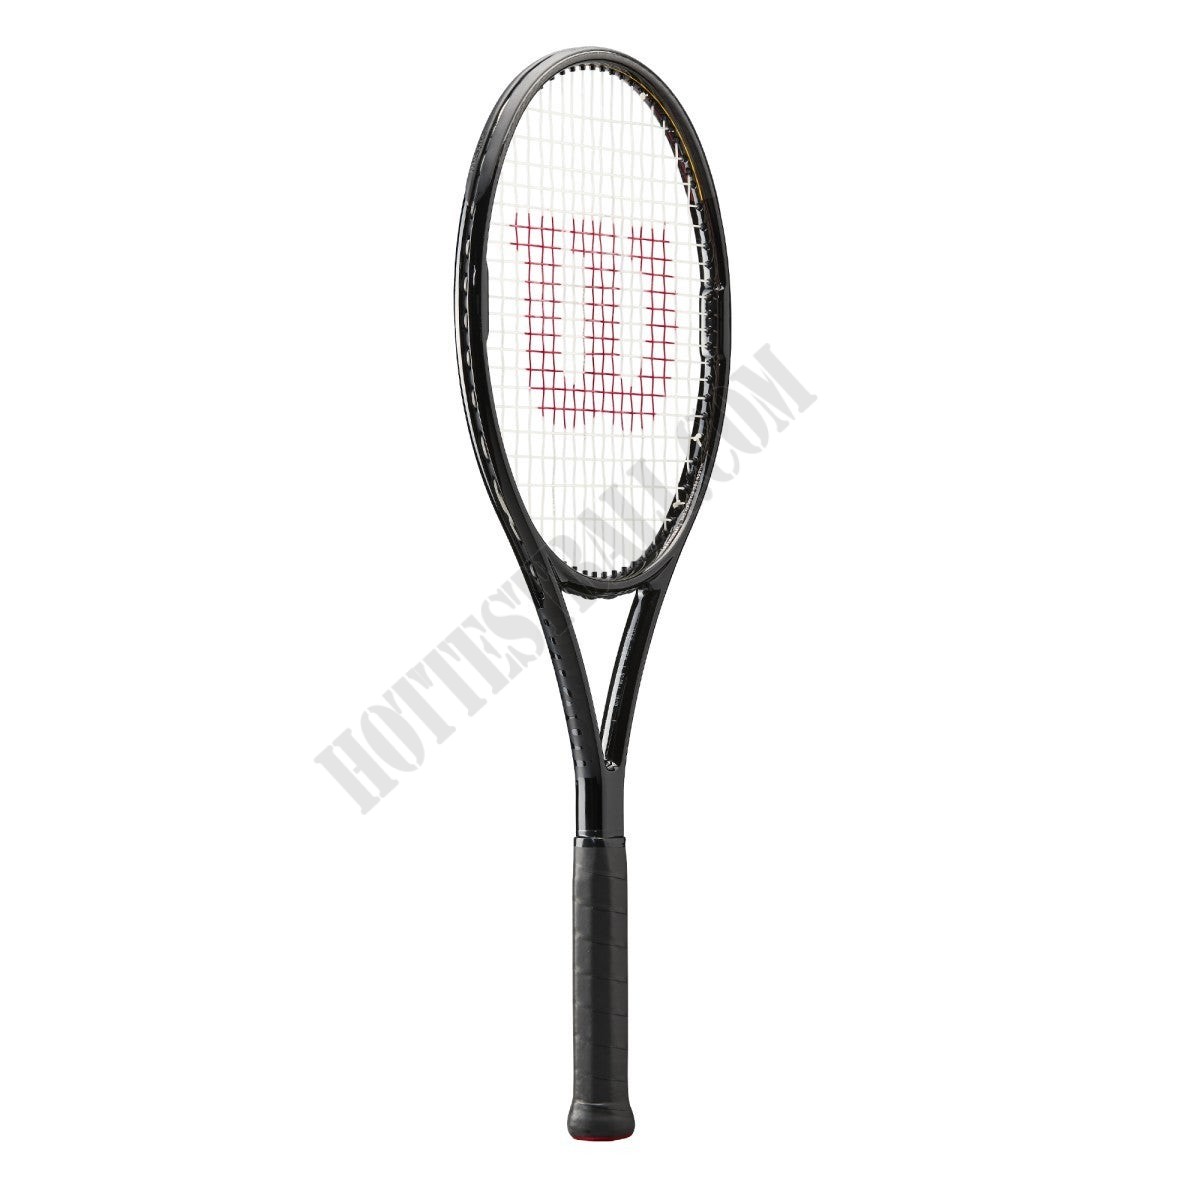 Pro Staff Six.One 95 (18x20) Tennis Racket - Wilson Discount Store - -0